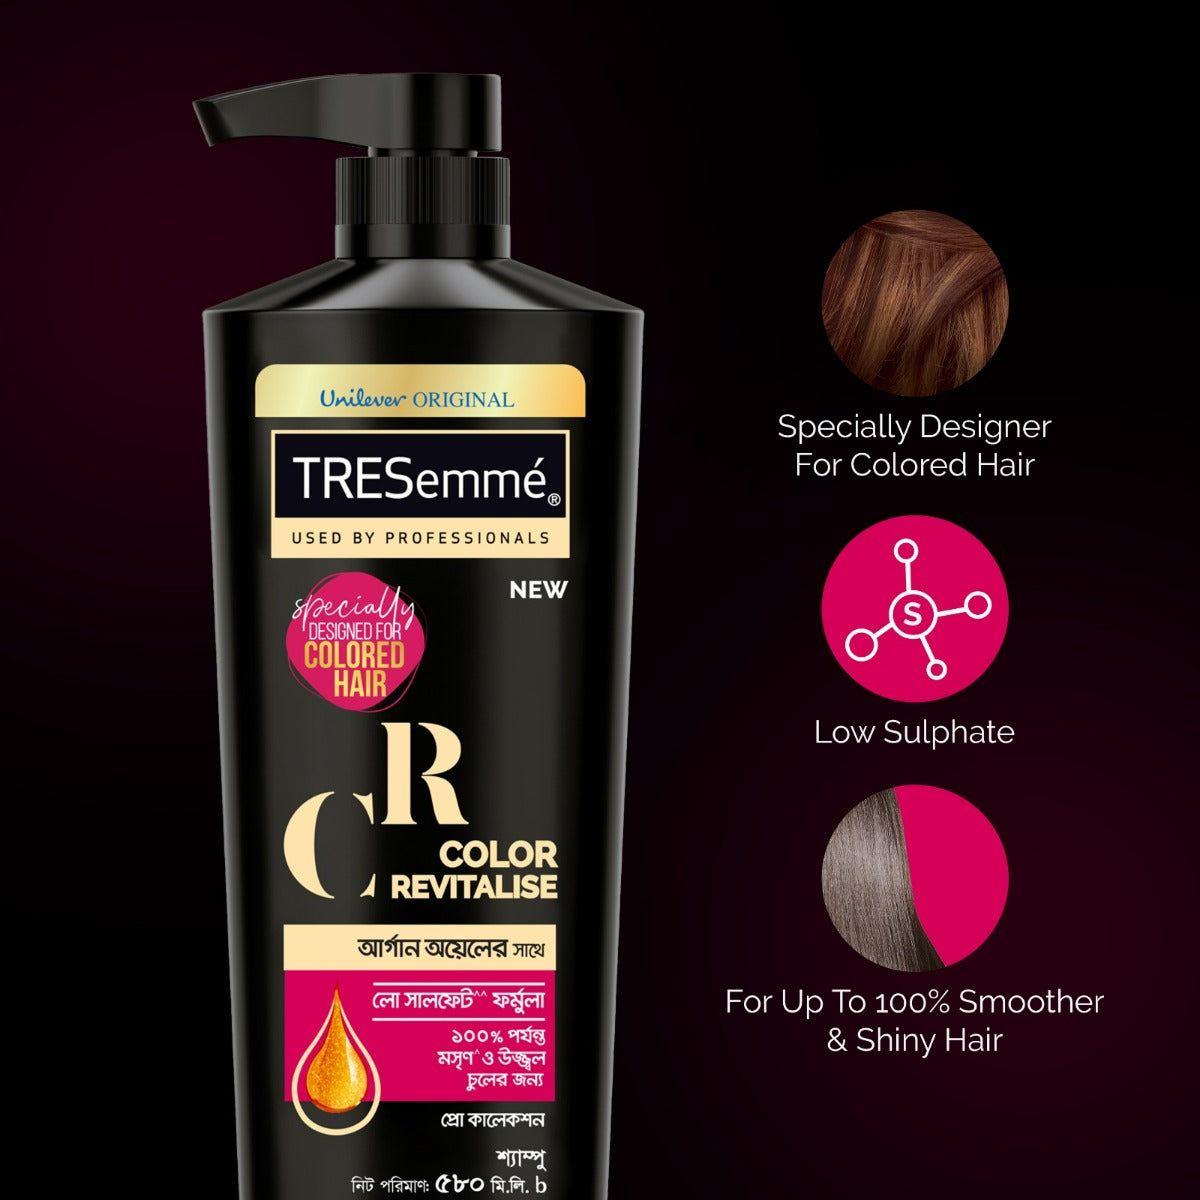 Tresemme Color Revitalise Shampoo (580ml)